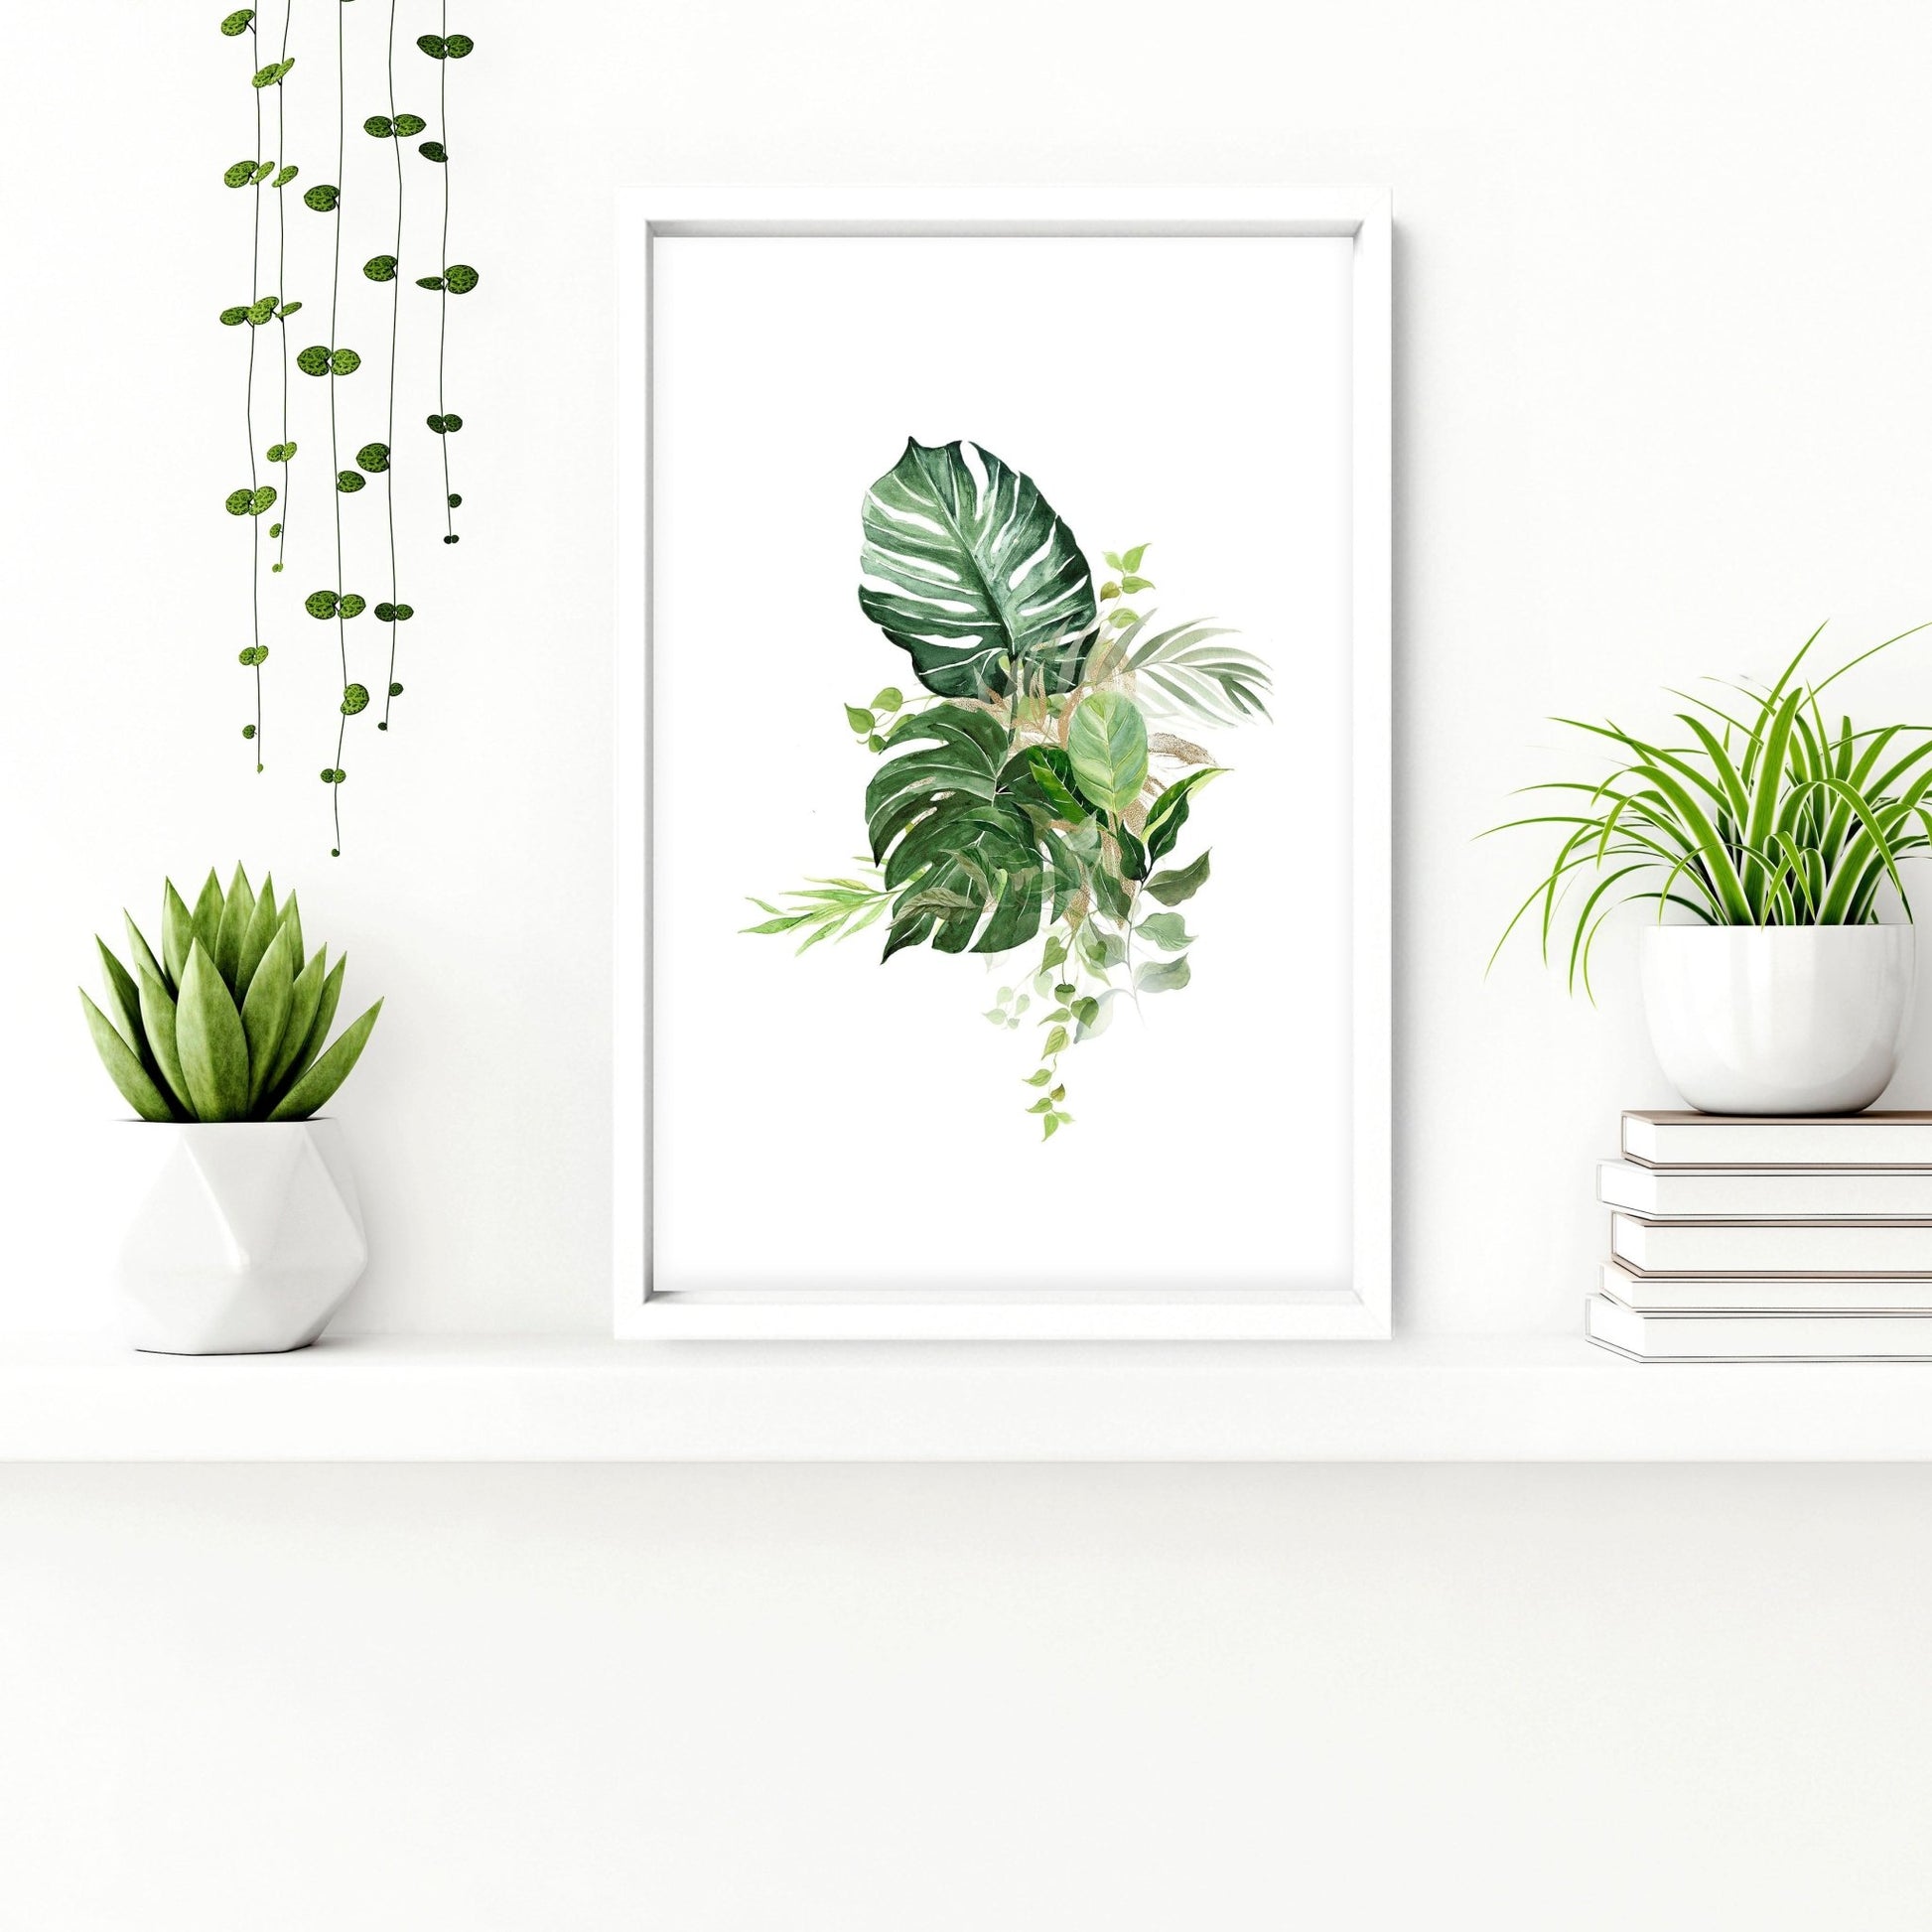 Print for bathroom wall | set of 3 Tropical wall prints